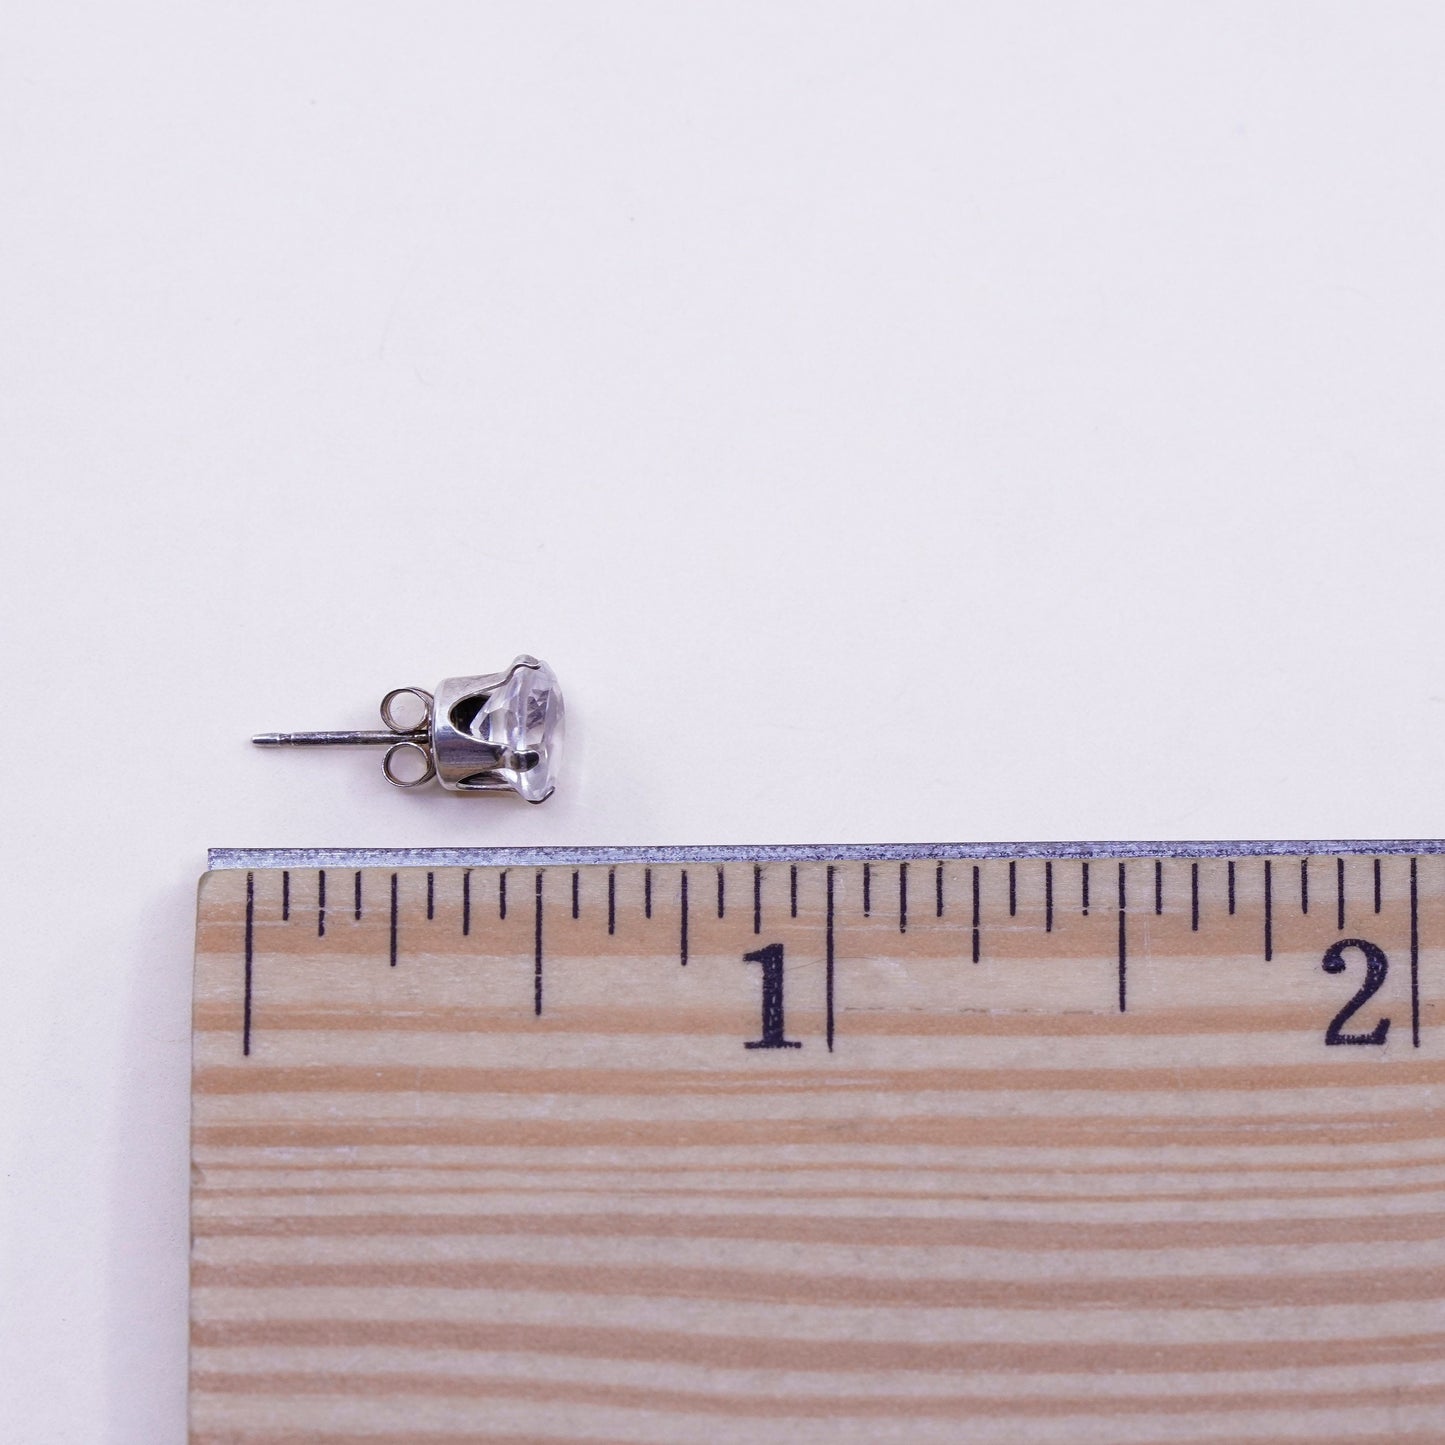 7mm, Vintage sterling 925 silver genuine round cz studs, earrings